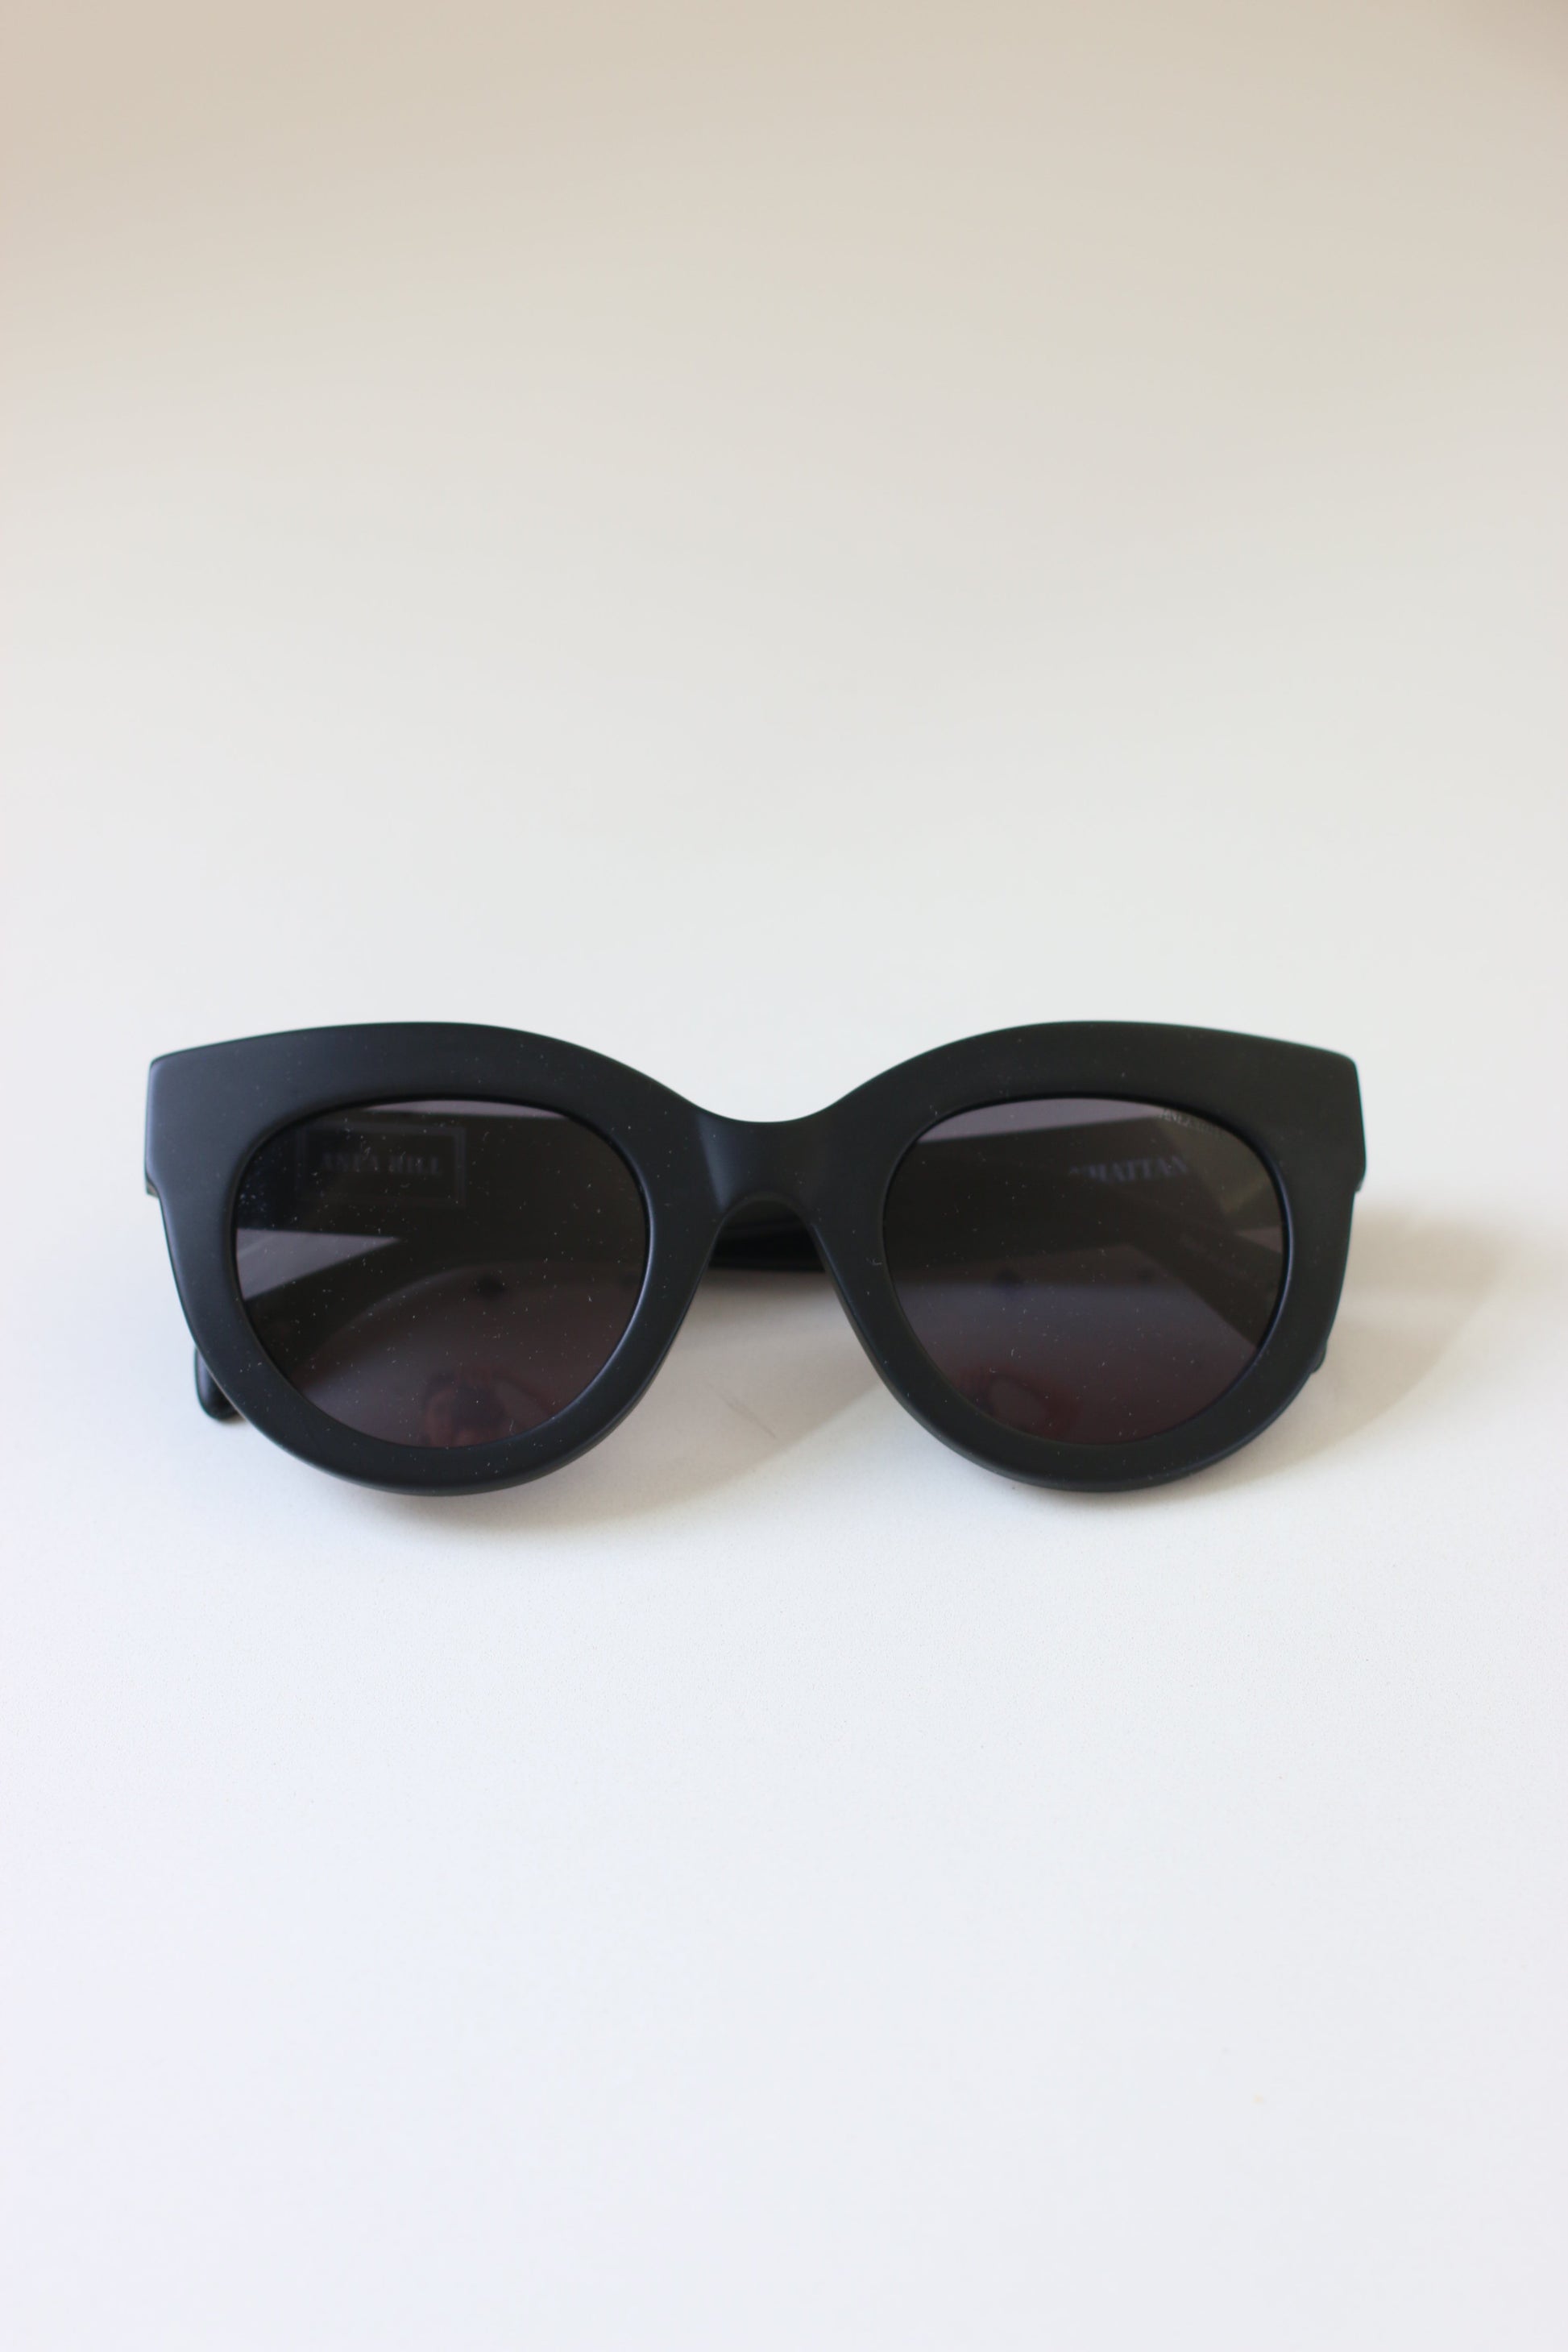 Luxury oversized sunglasses with matte black acetate frames, Anea Hill Manhattan